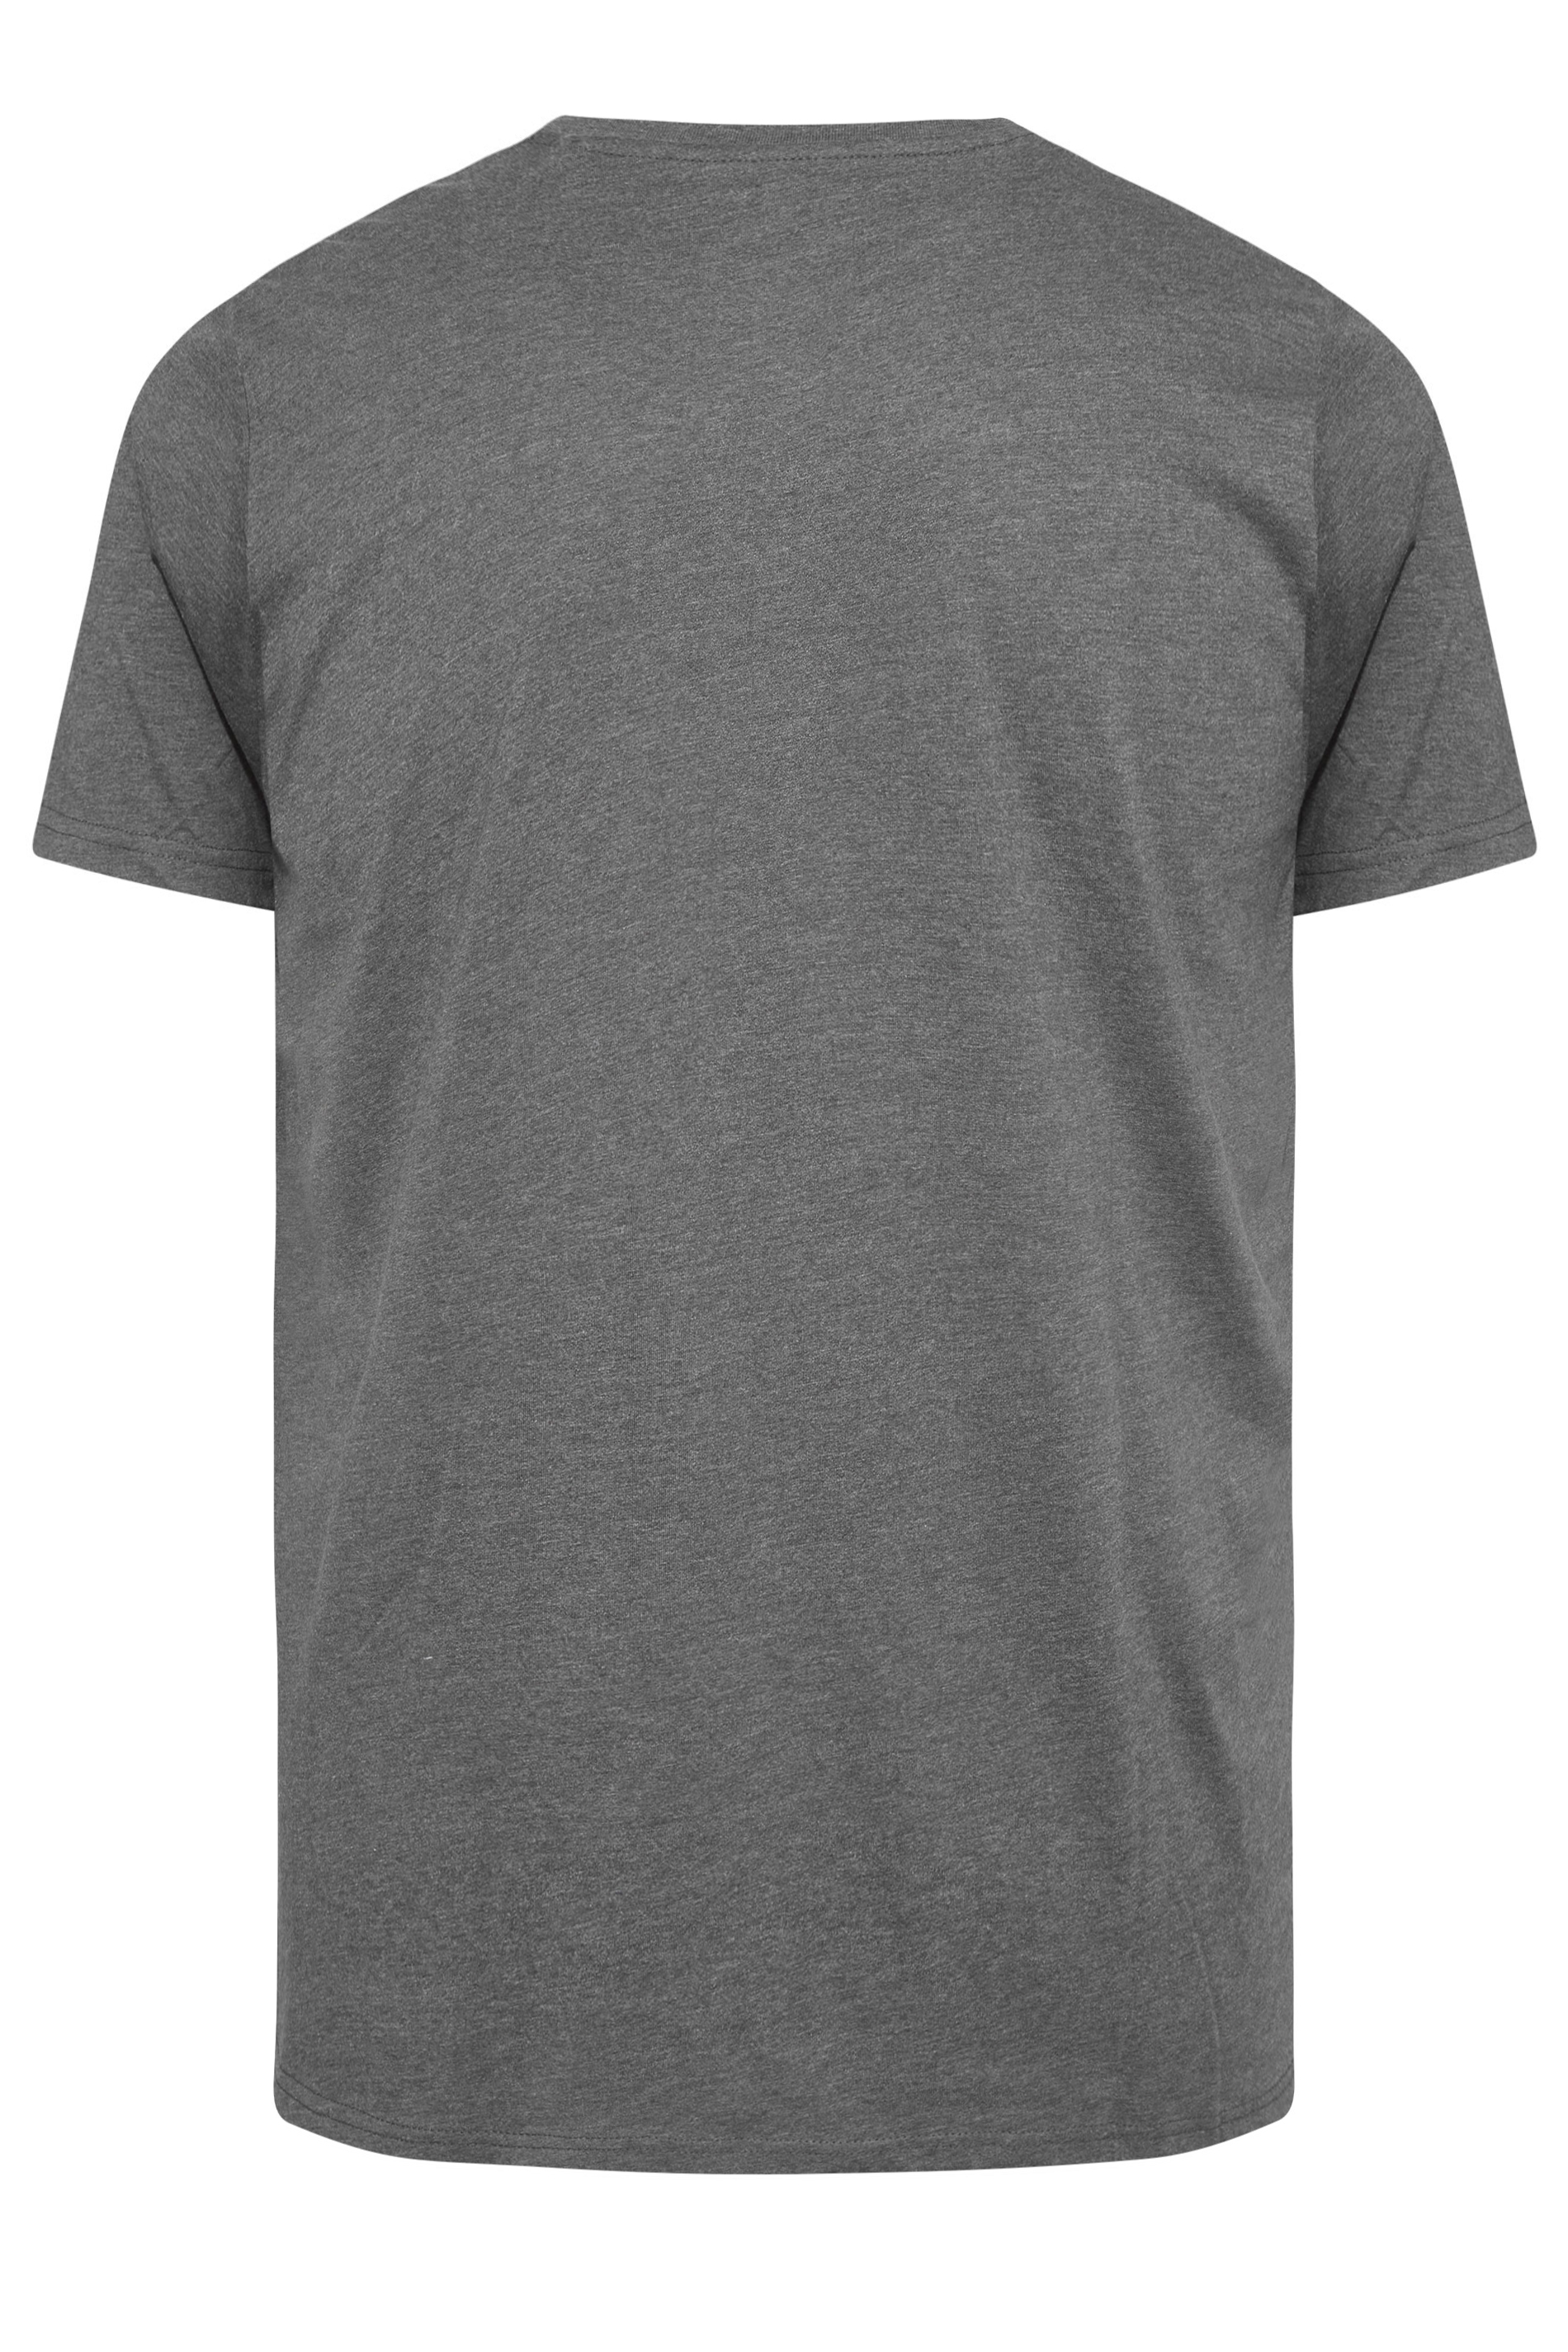 BadRhino Charcoal Grey Core T-Shirt | BadRhino